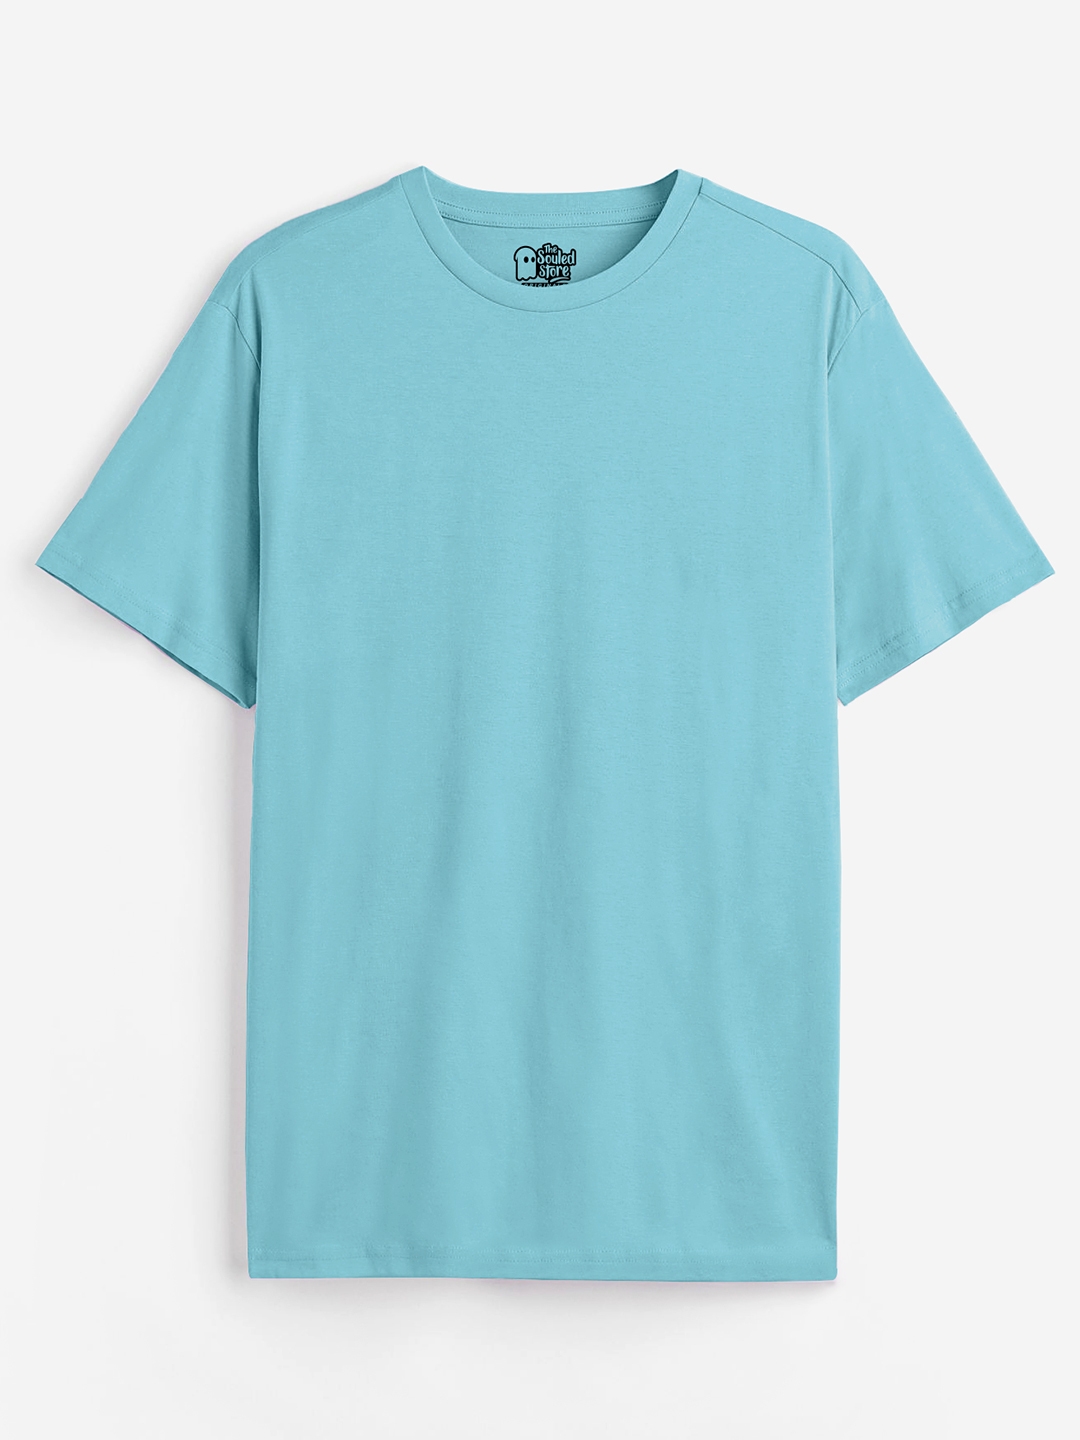 Men's Solids: Serene Sky T-Shirt